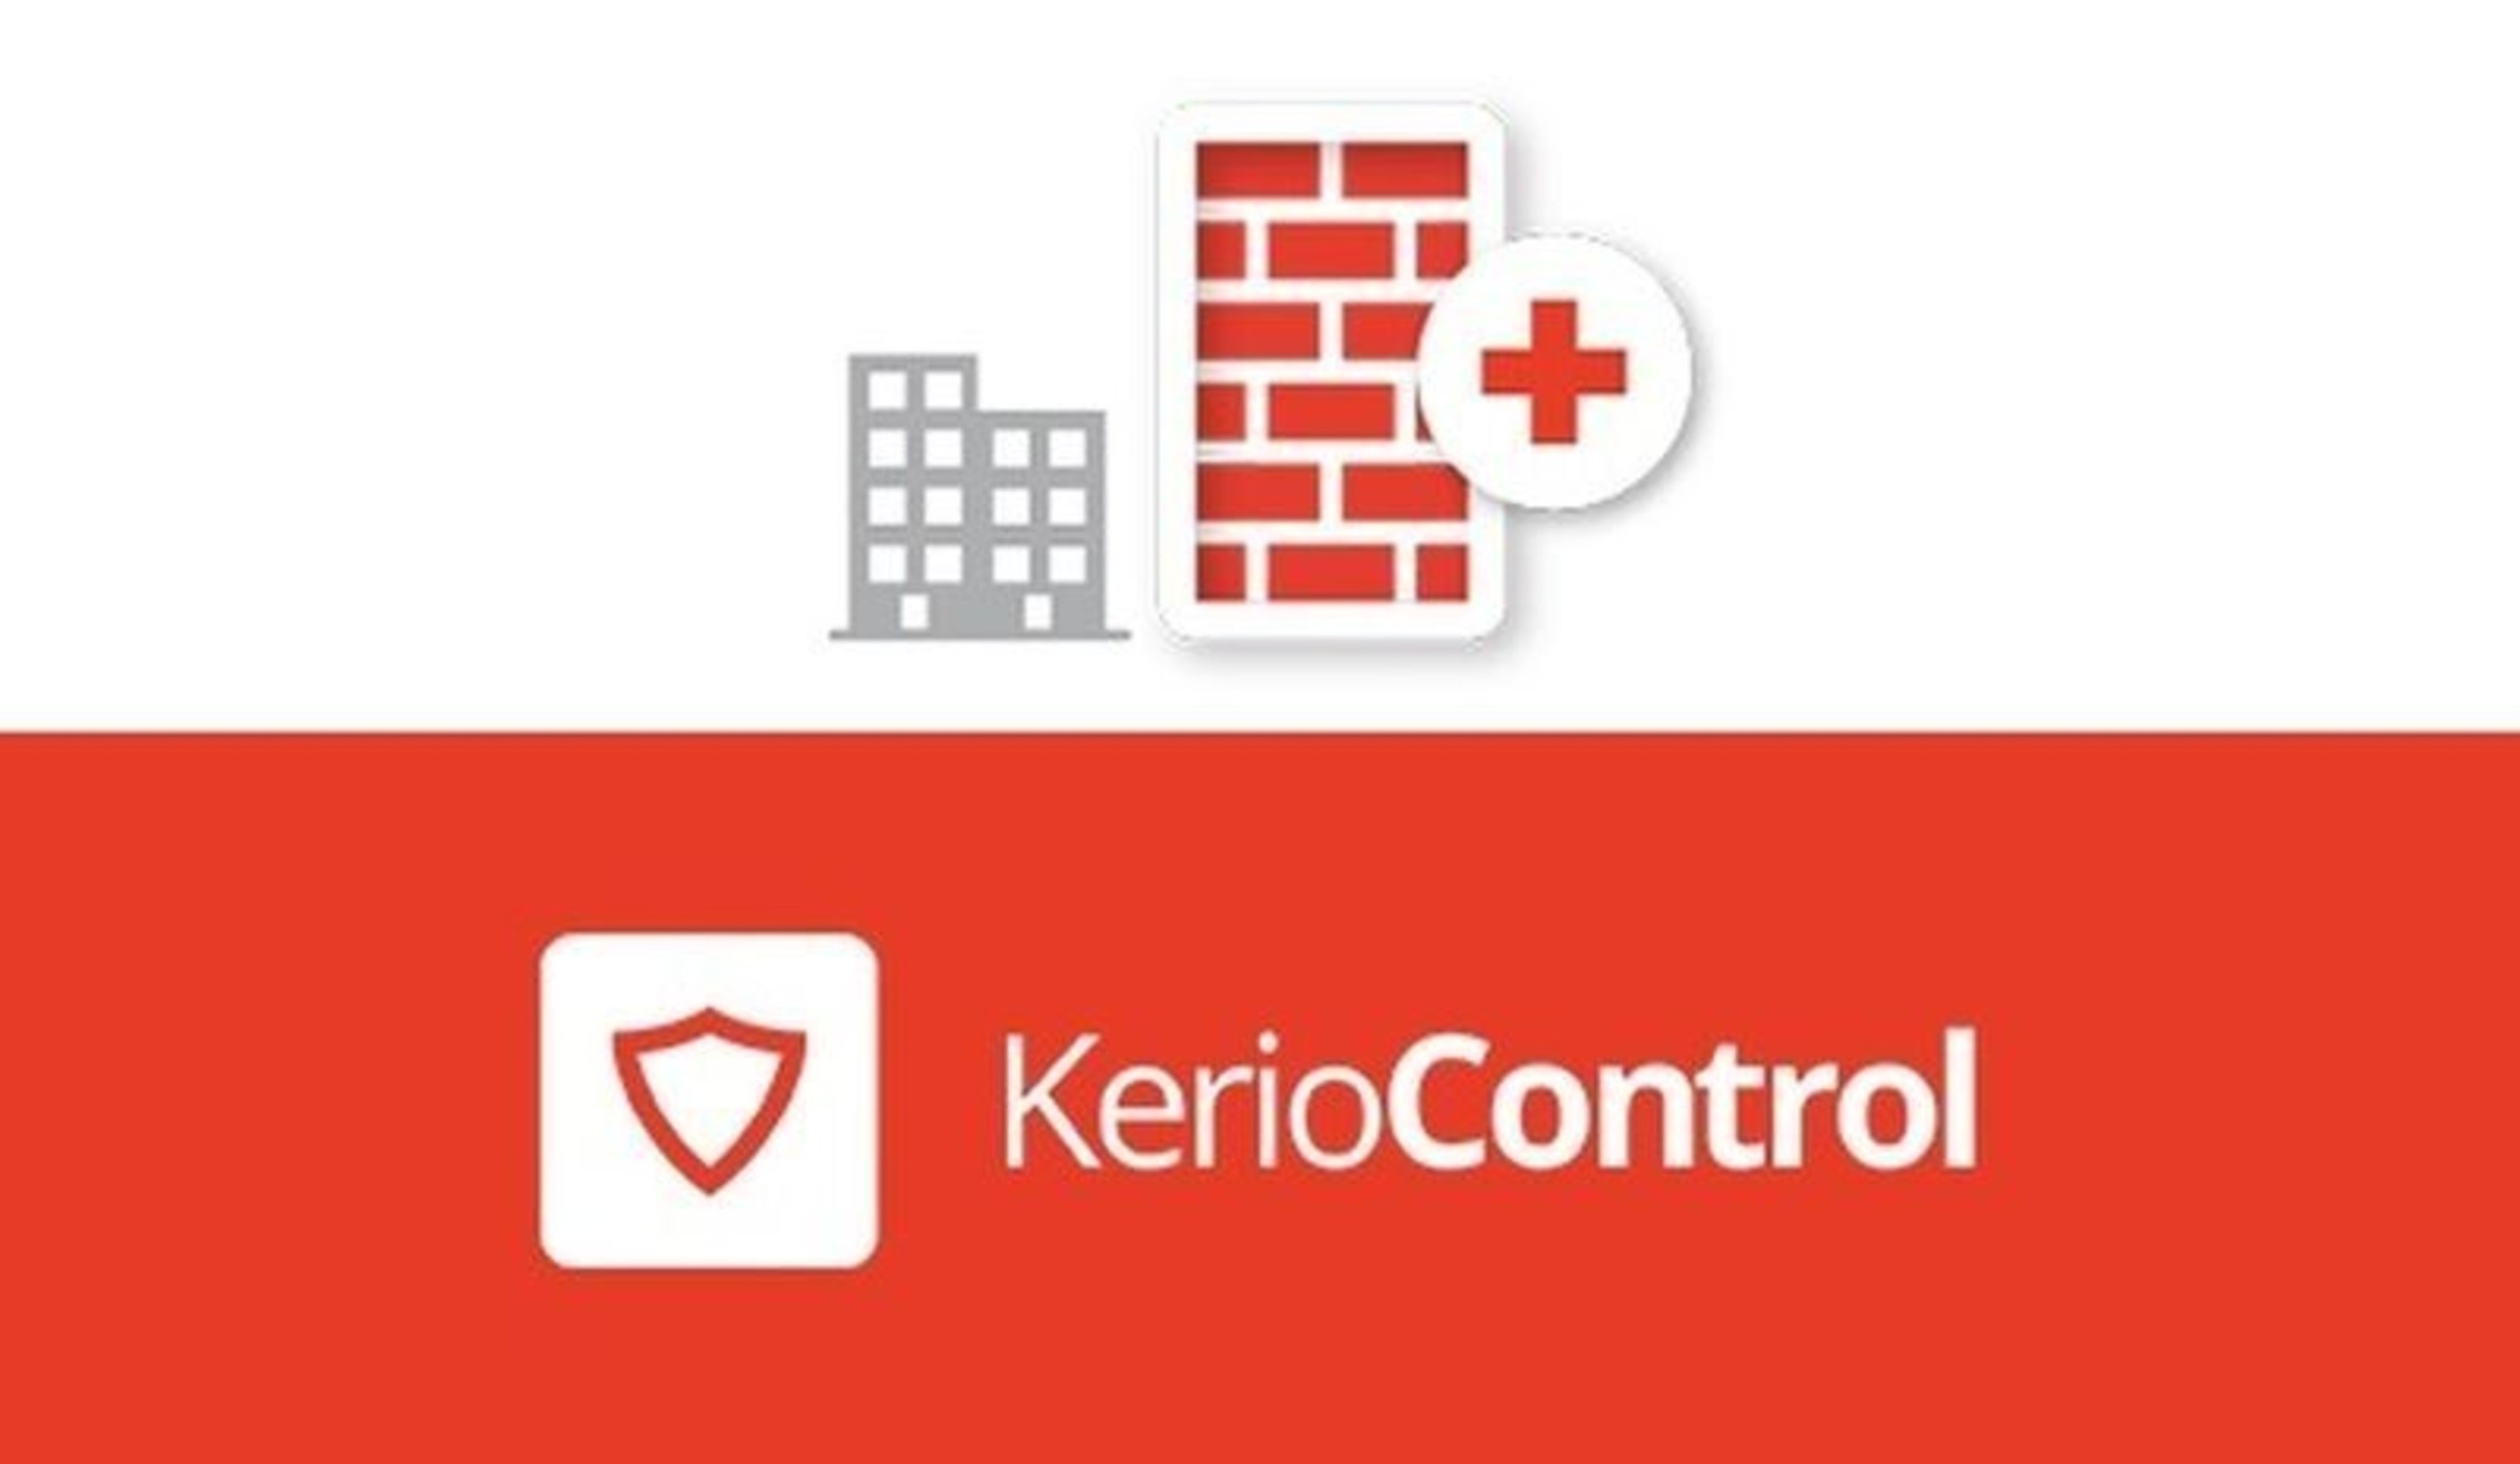 Kerio Control by Kerio Technologies (PRNewsFoto/Kerio Technologies) (PRNewsFoto/Kerio Technologies)